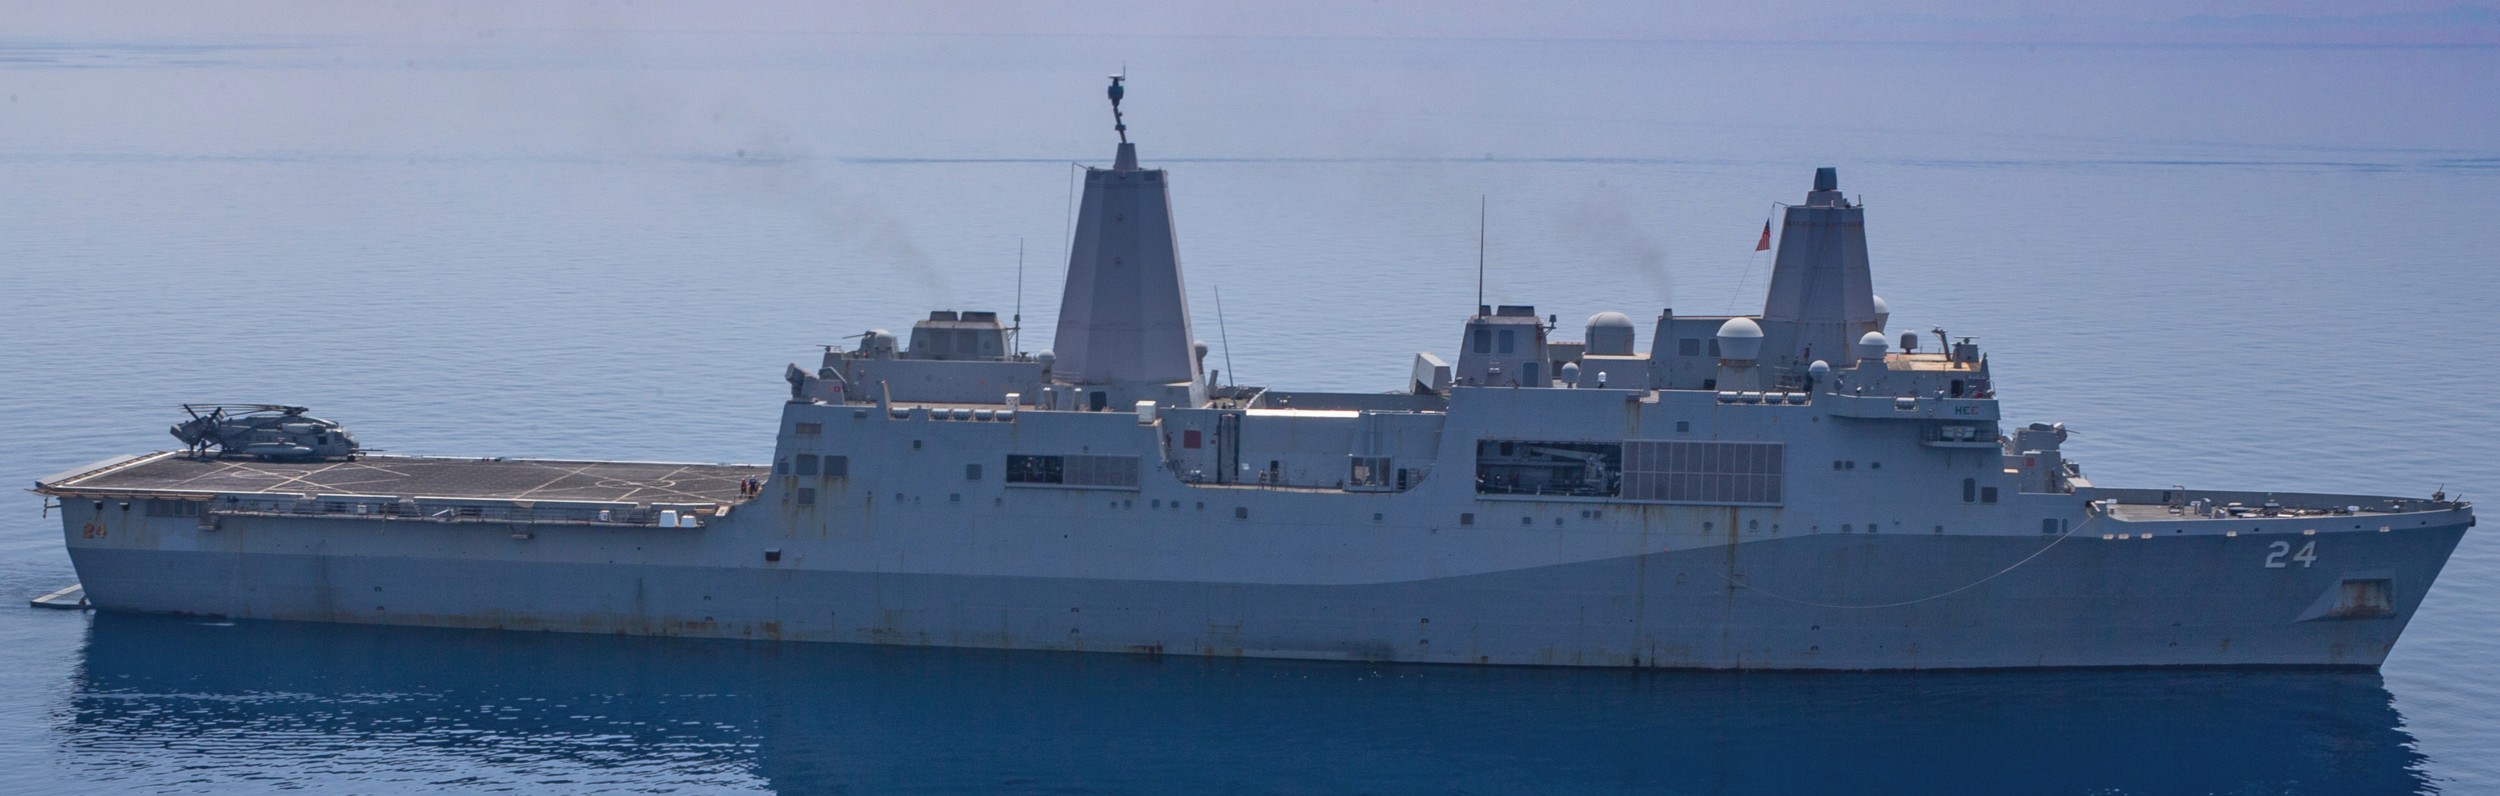 lpd-24 uss arlington amphibious transport dock landing ship us navy aegean sea 133